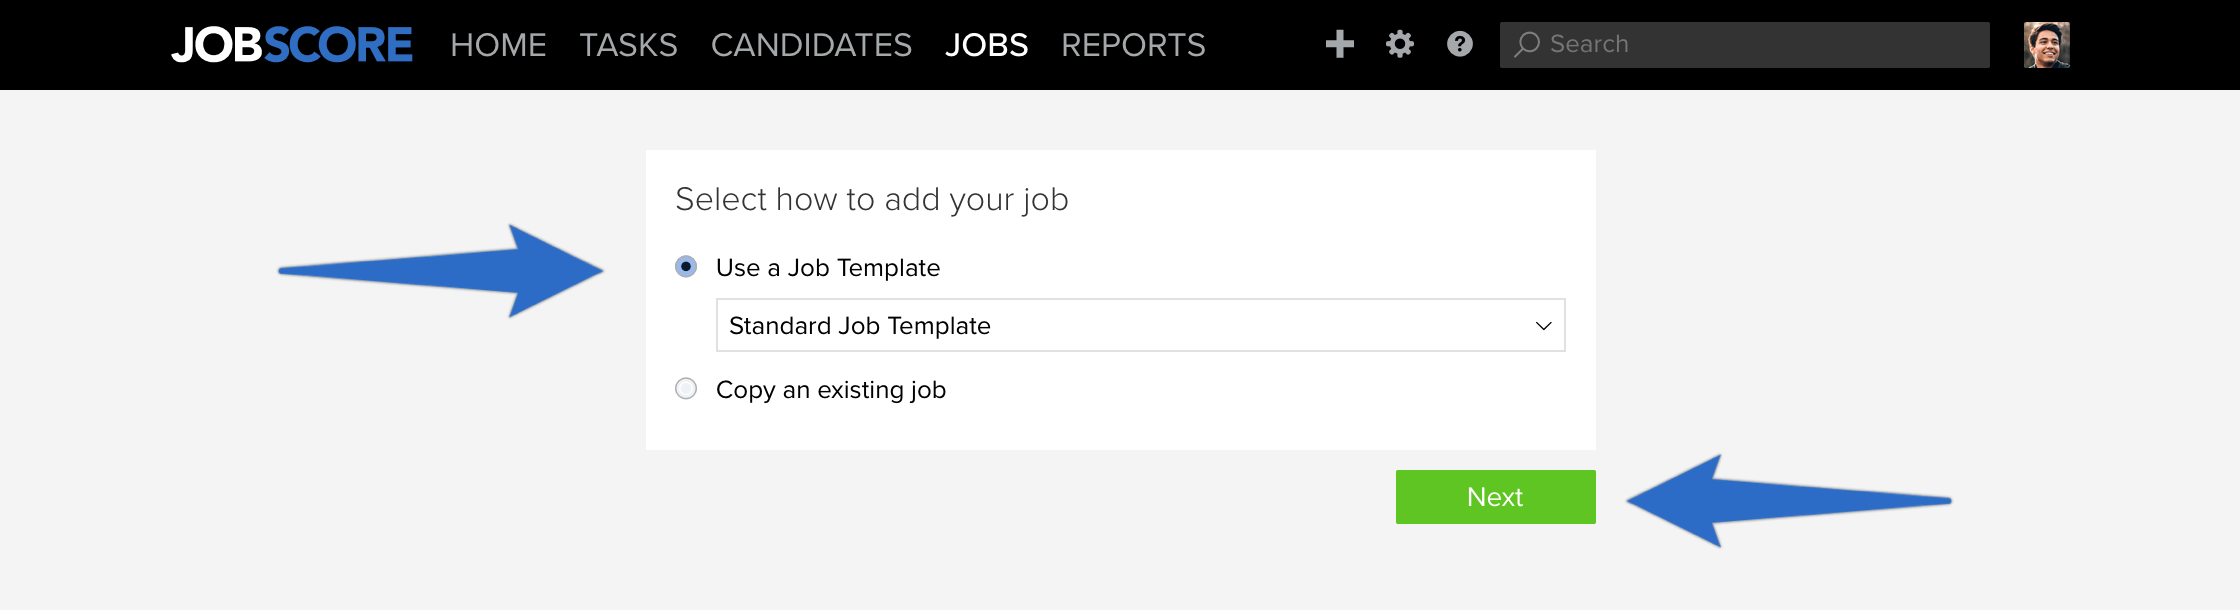 Use_a_job_template